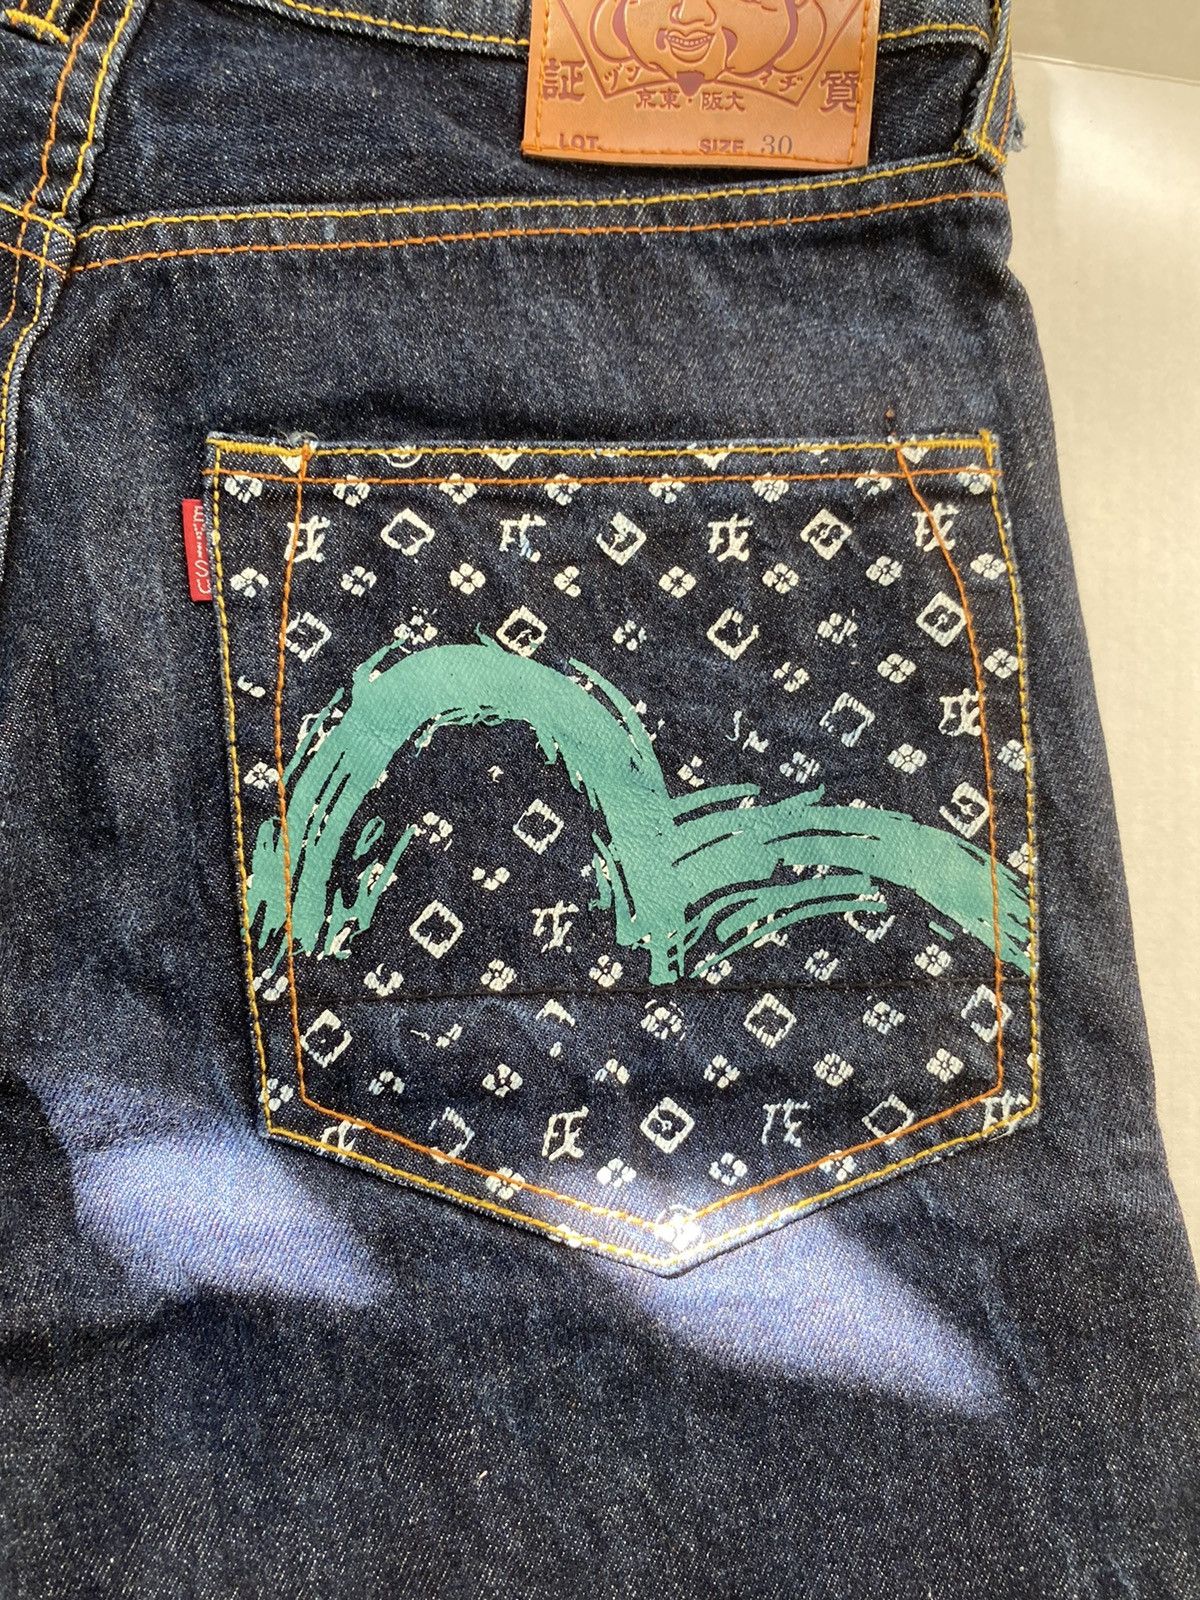 Vintage Vintage Evisu raw denim jeans Size US 30 / EU 46 - 5 Thumbnail